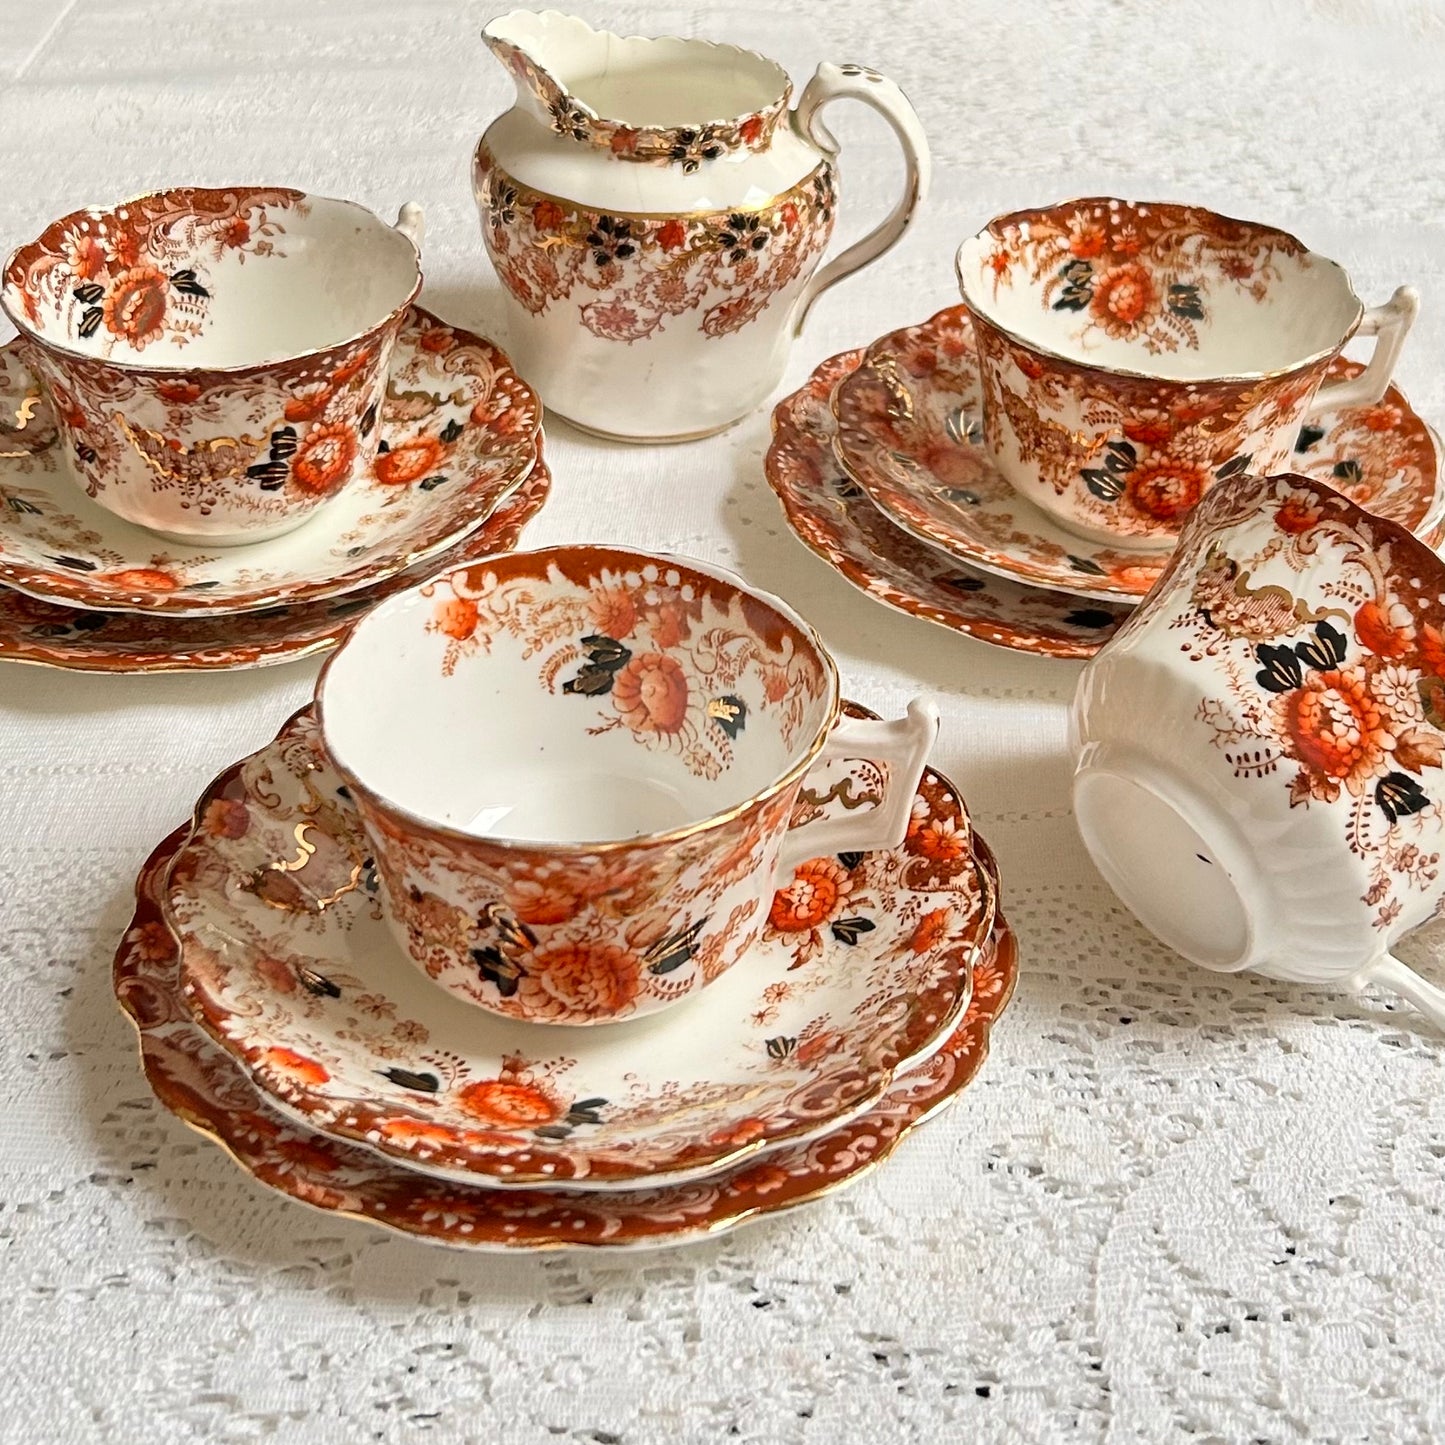 Antique English Tea Set